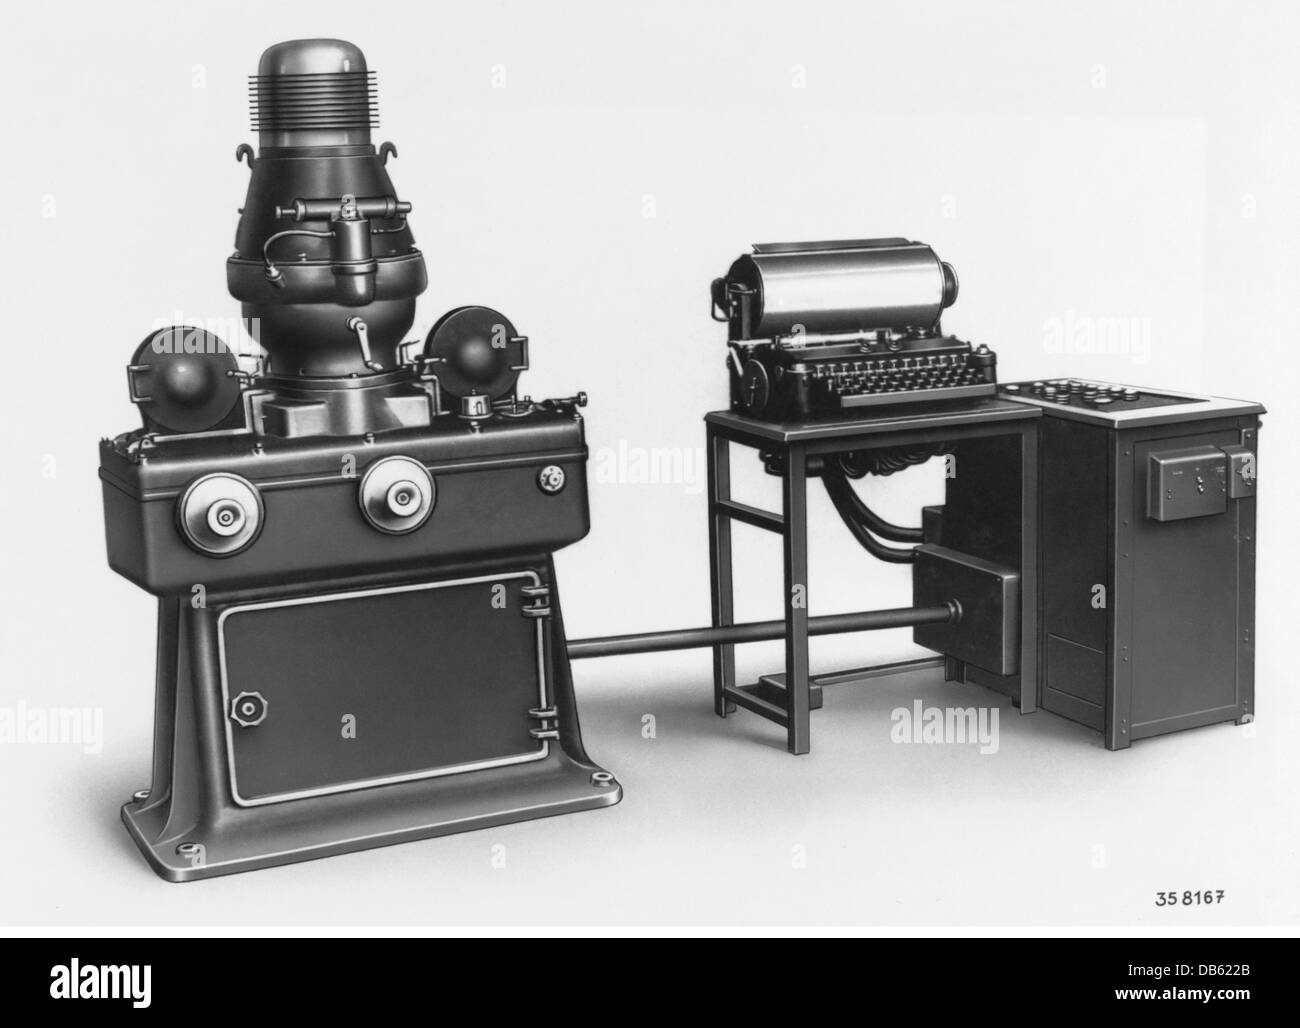 Tecnica, tipografia, macchina per filmsetting, inventata da Edmund Uher, 1930, Additional-Rights-Clearences-Not Available Foto Stock